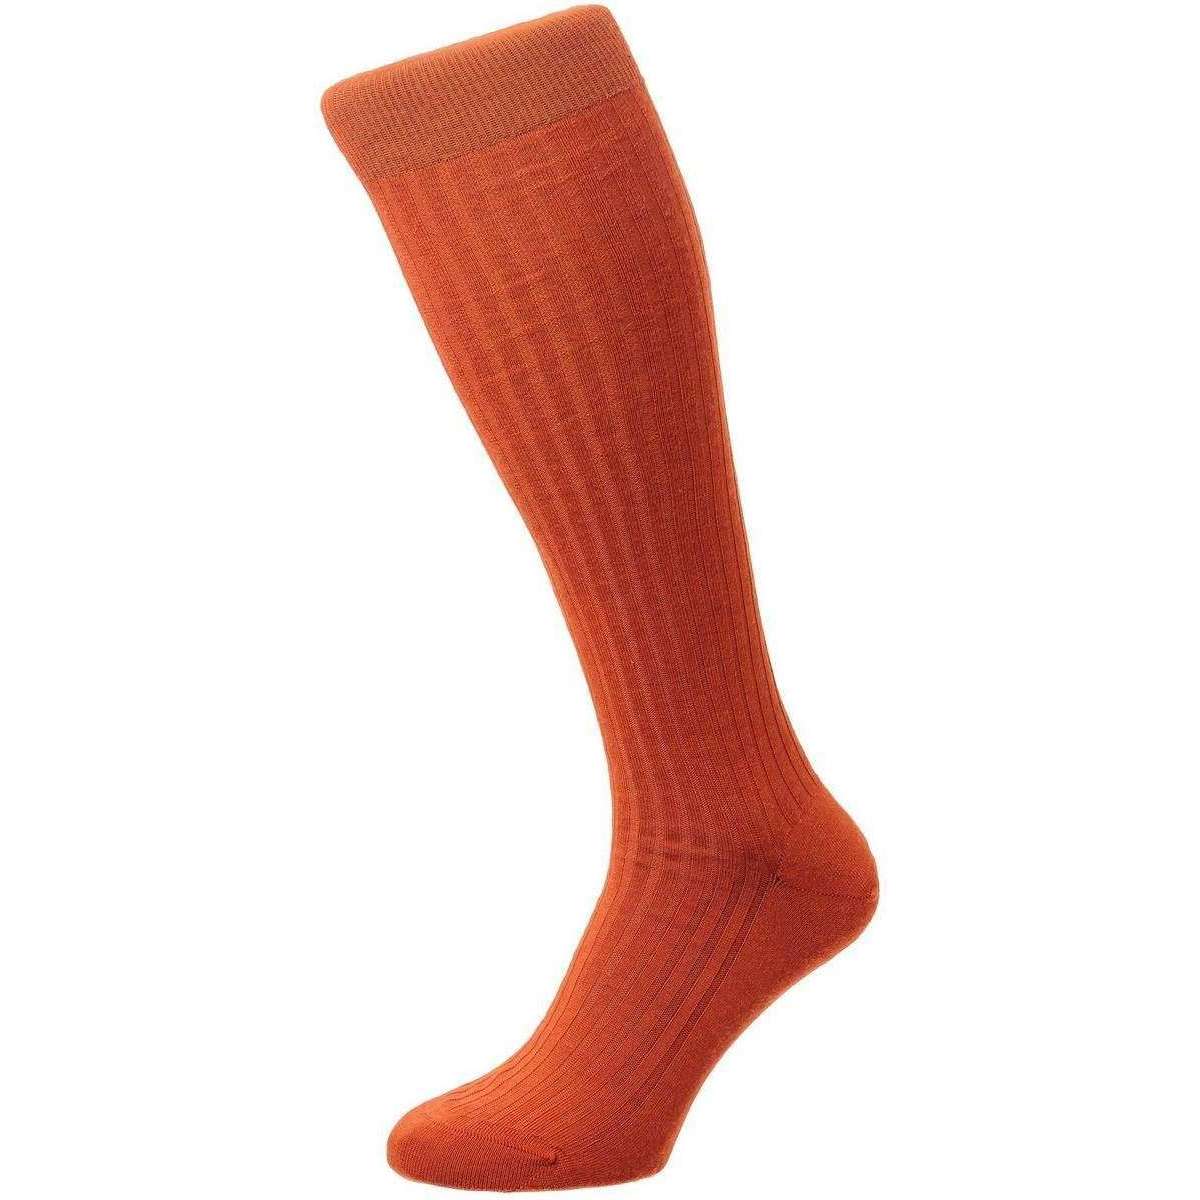 Pantherella Laburnum Merino Wool Over the Calf Socks - Burnt Orange